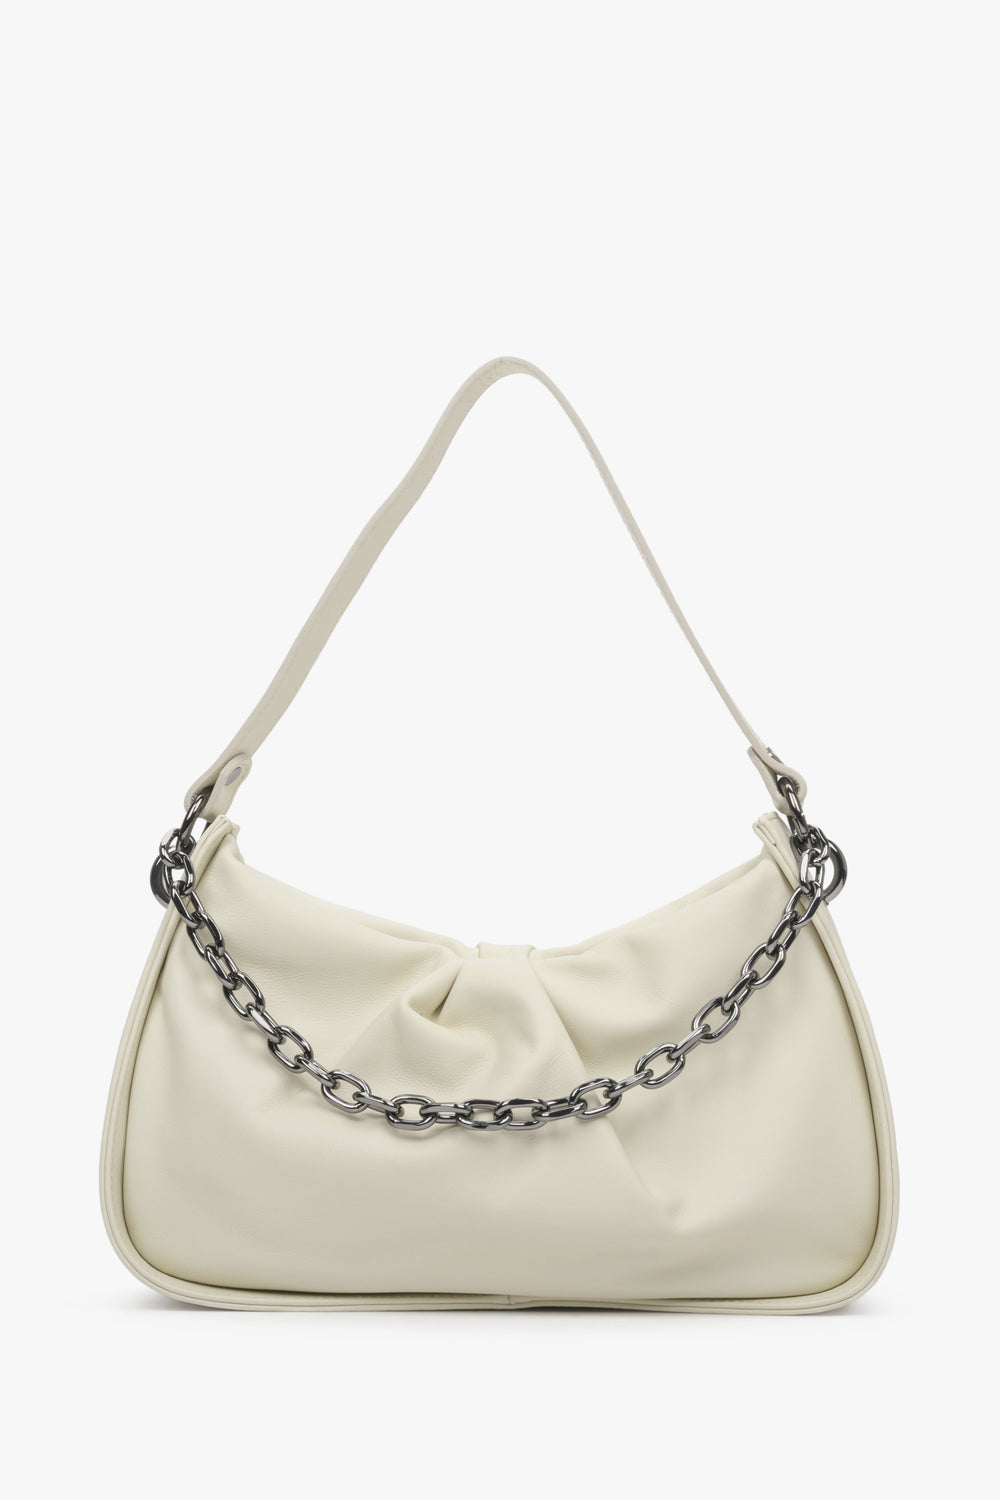 Women's Light Beige Leather Shoulder Bag with a Chain Strap Estro ER00112414.